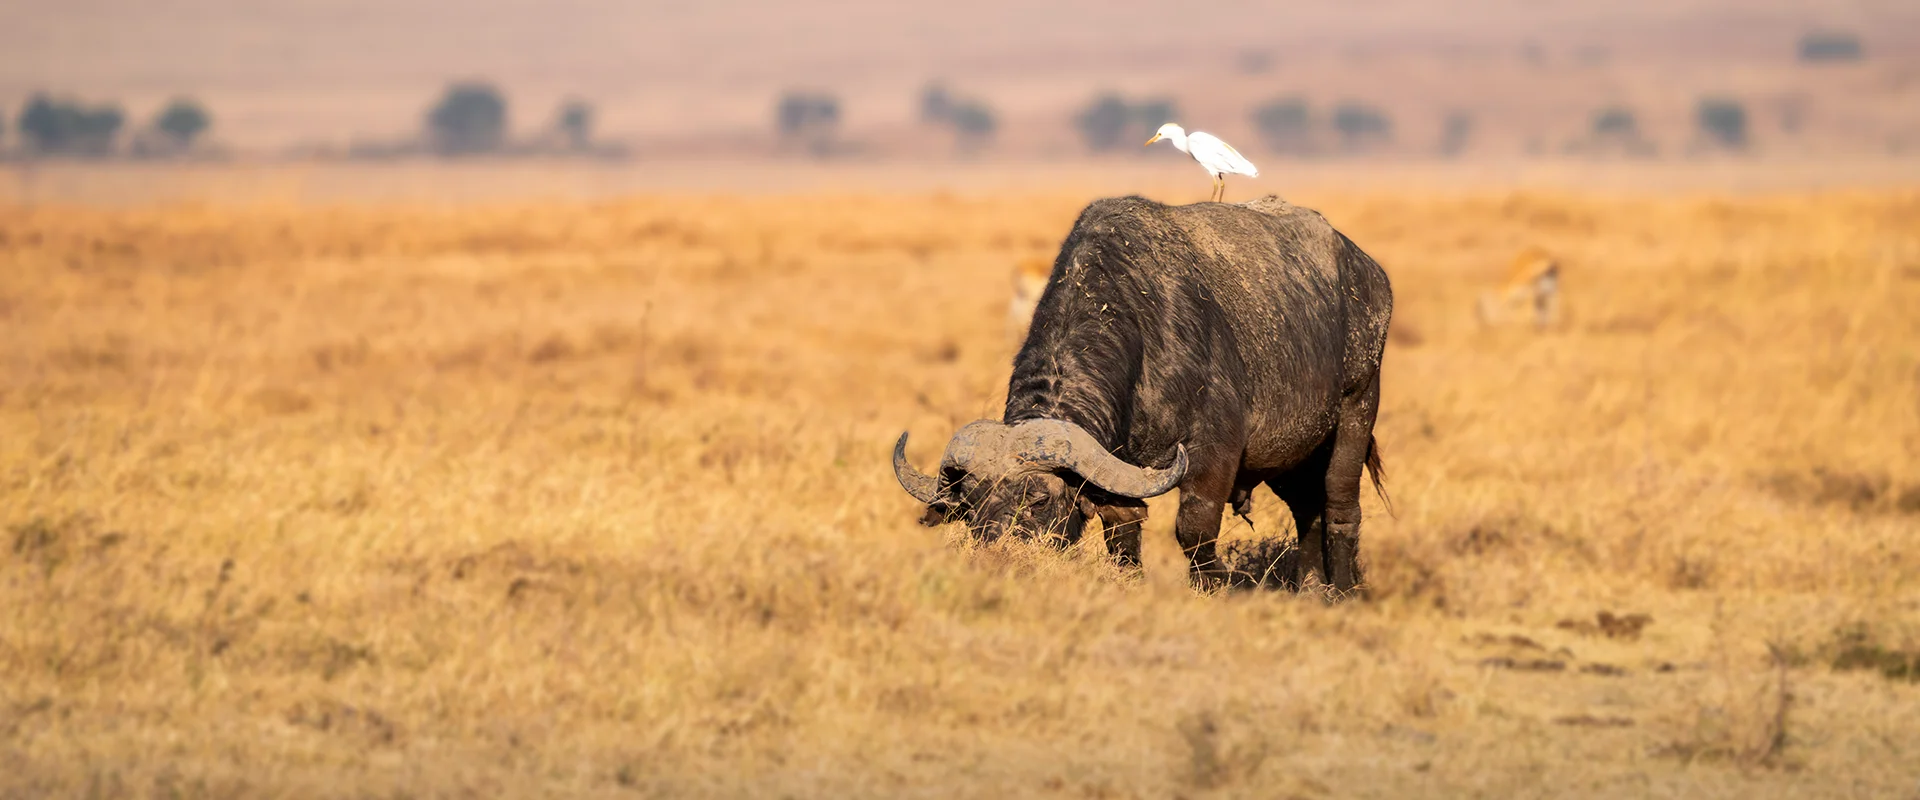 Northern Tanzania Wildlife Safari - Private Budget1